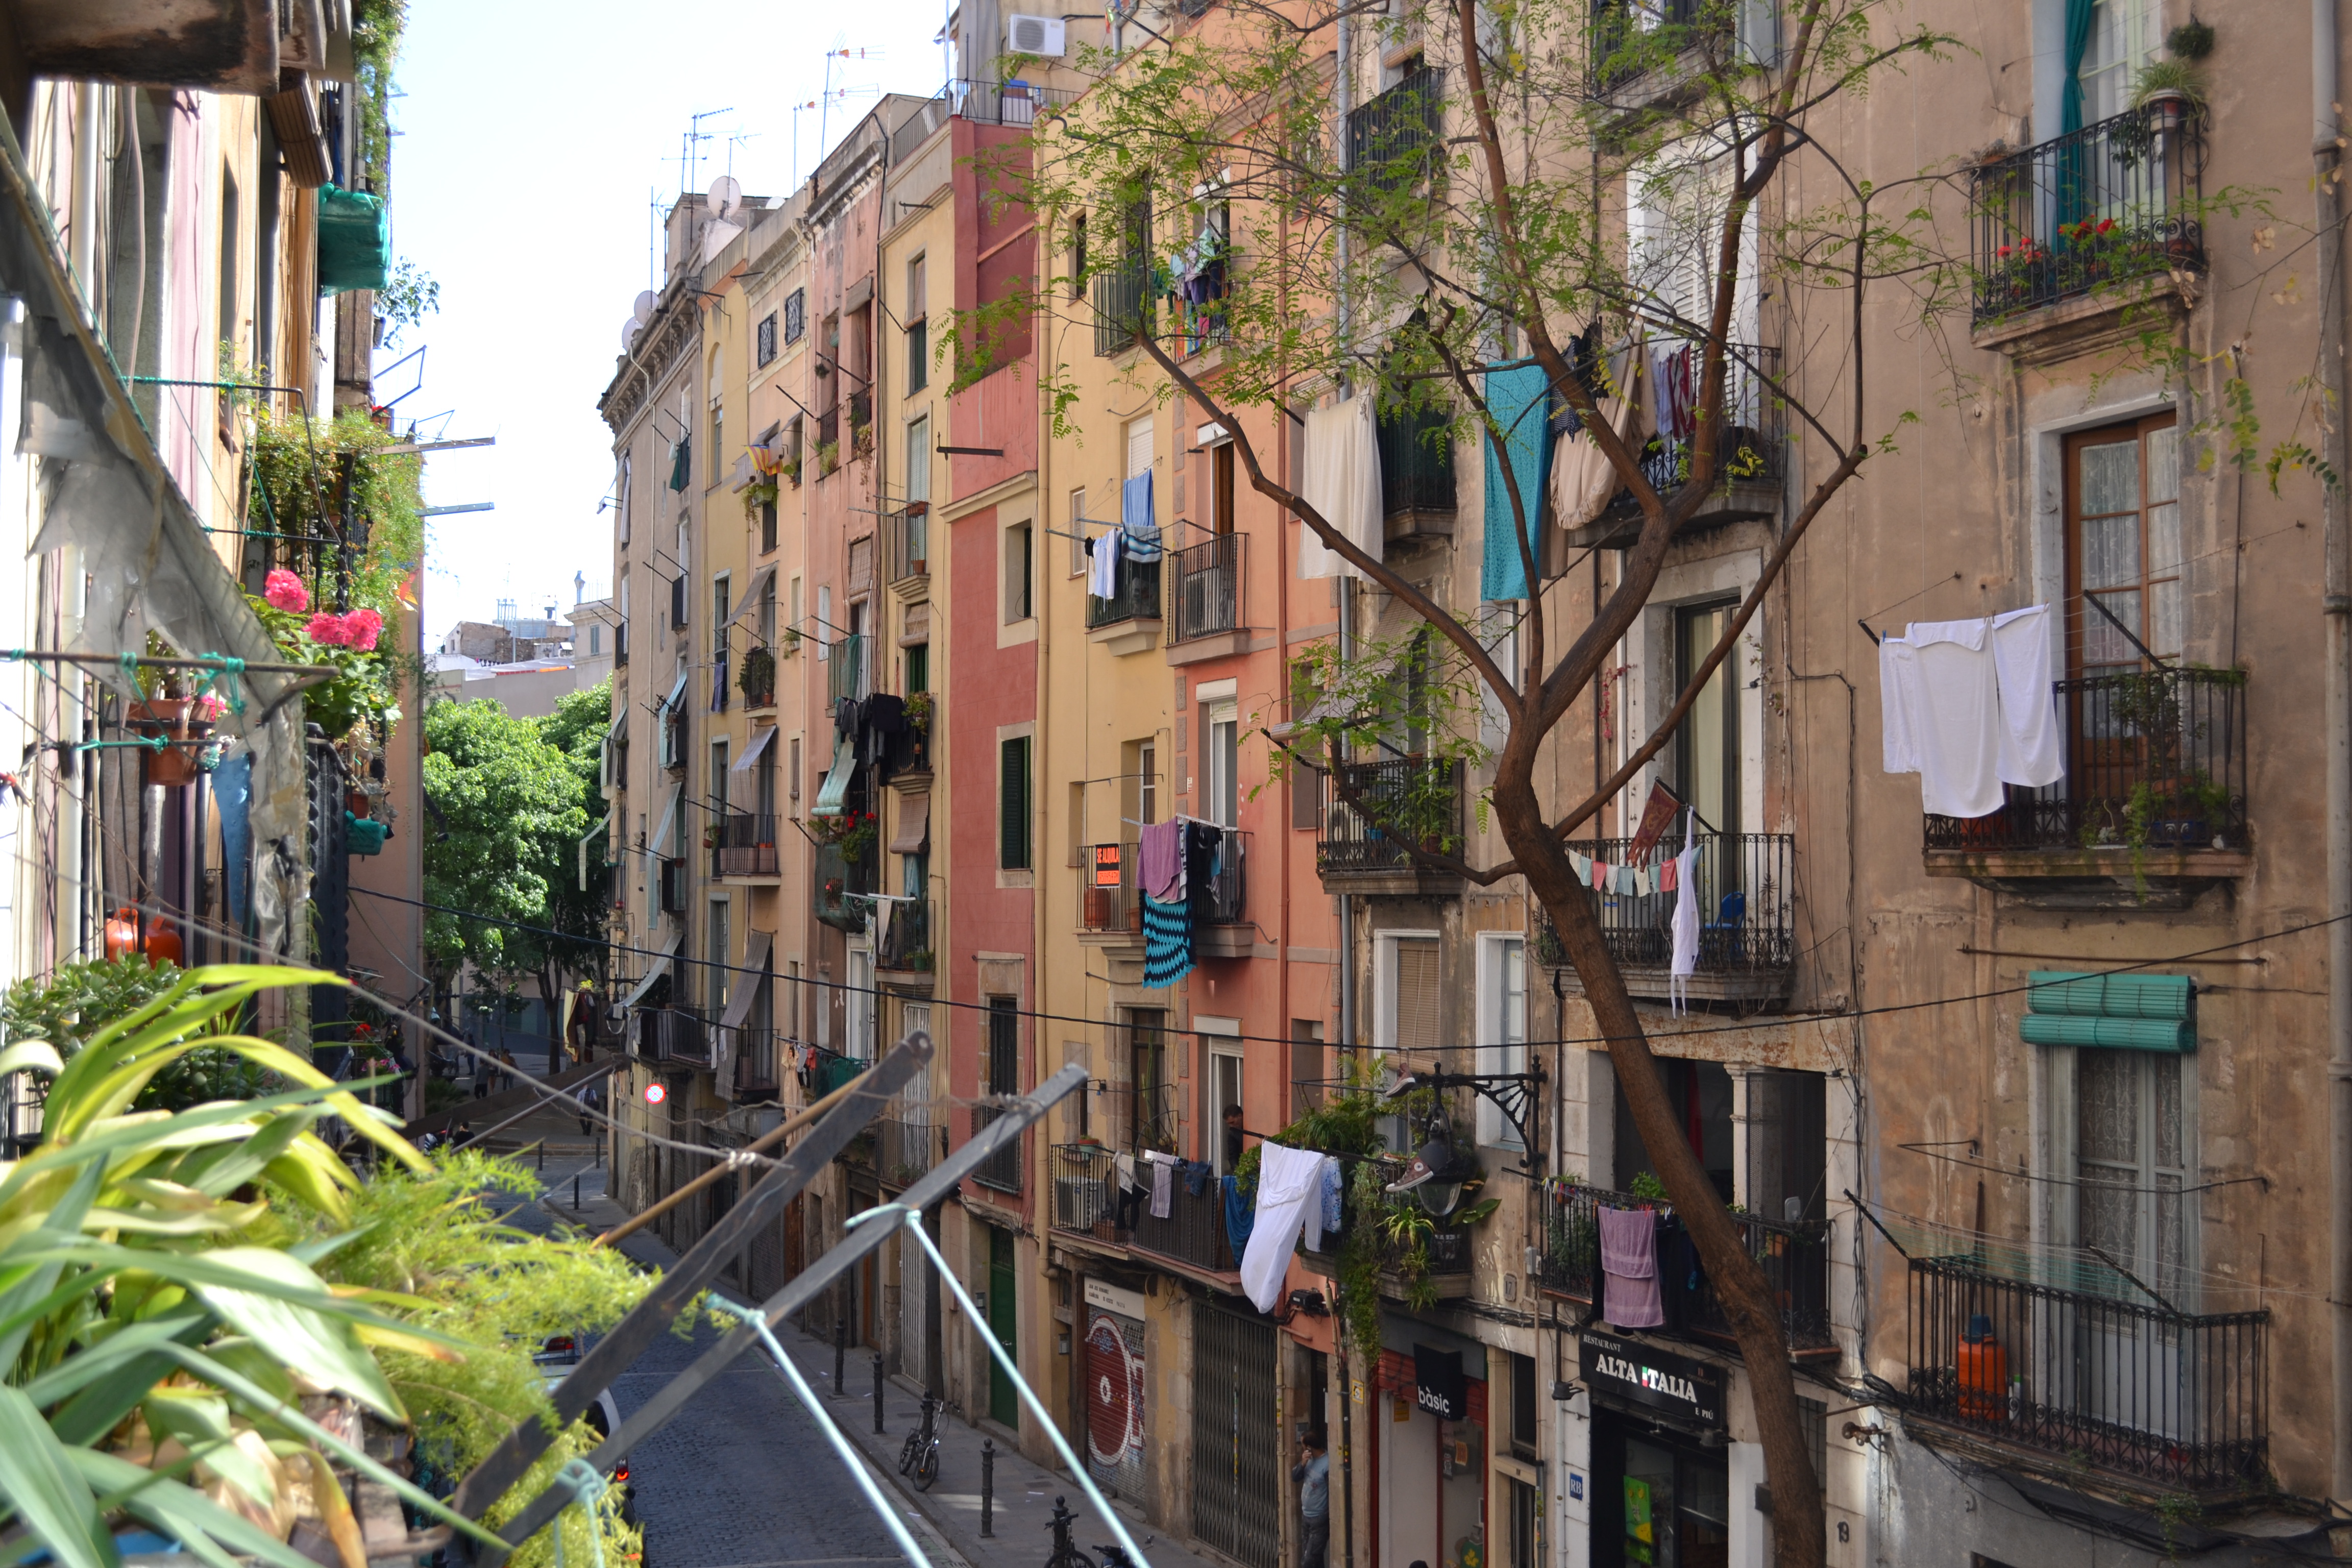 barcelona city nickname - typical neighbourhood in barcelona